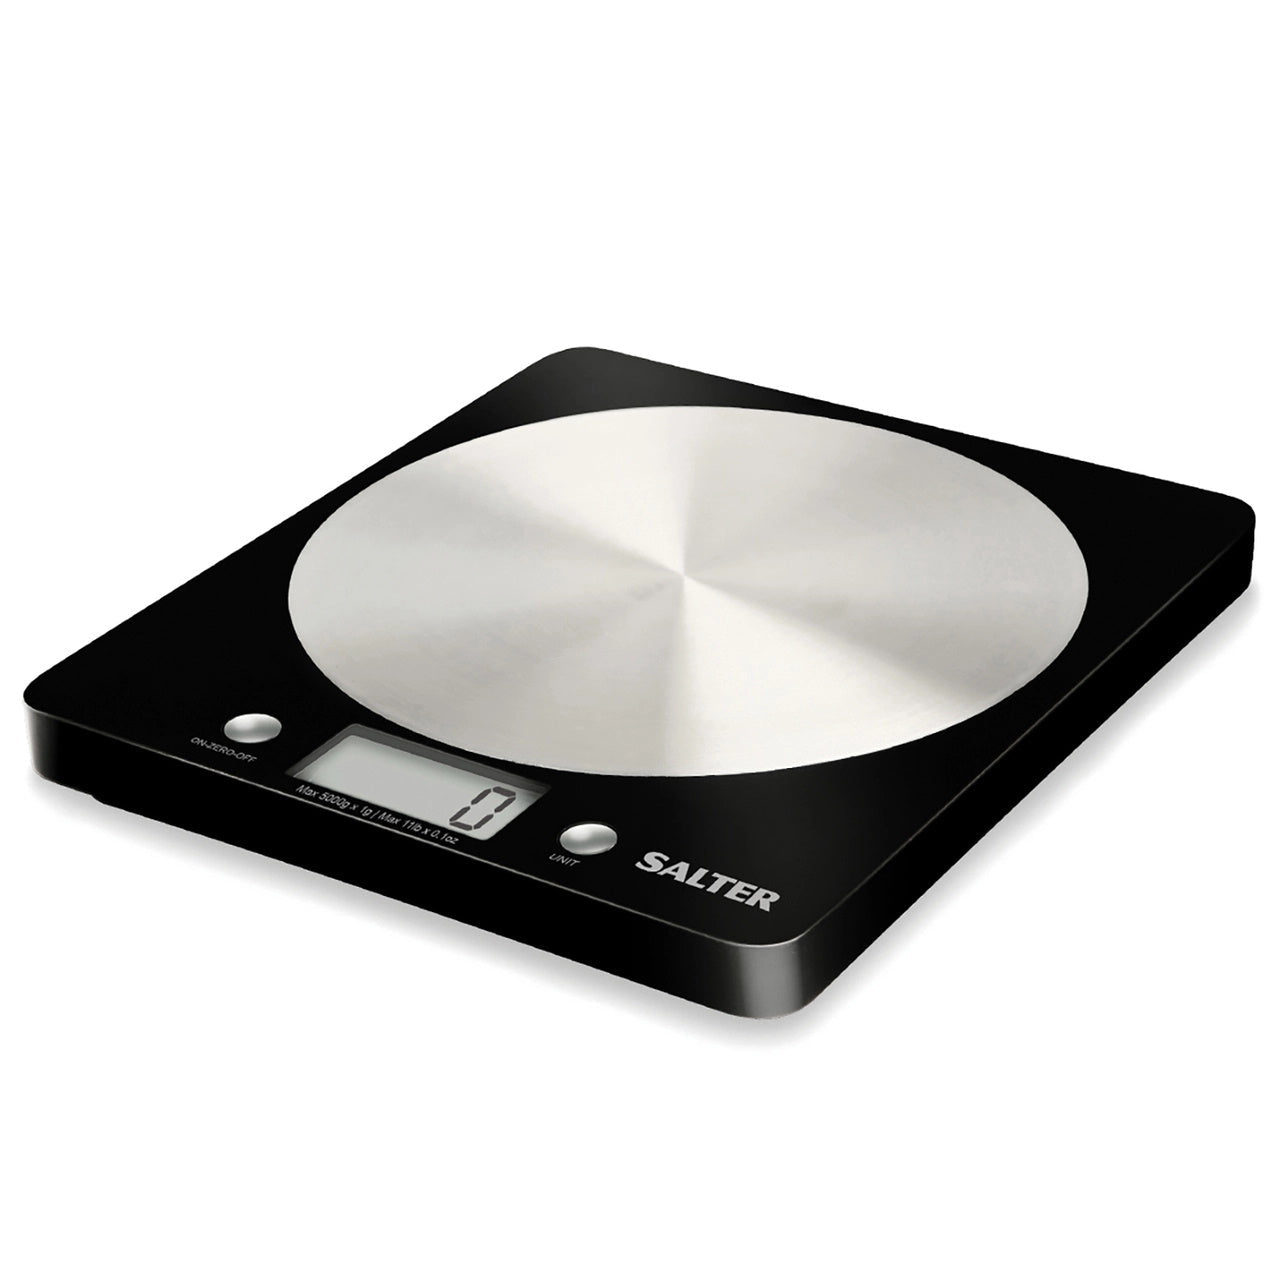 Salter 1036BKSSDR Disc Digital Kitchen Scale, 5kg Capacity, Black - Premium Digital Kitchen Scales from Salter - Just $21.95! Shop now at W Hurst & Son (IW) Ltd